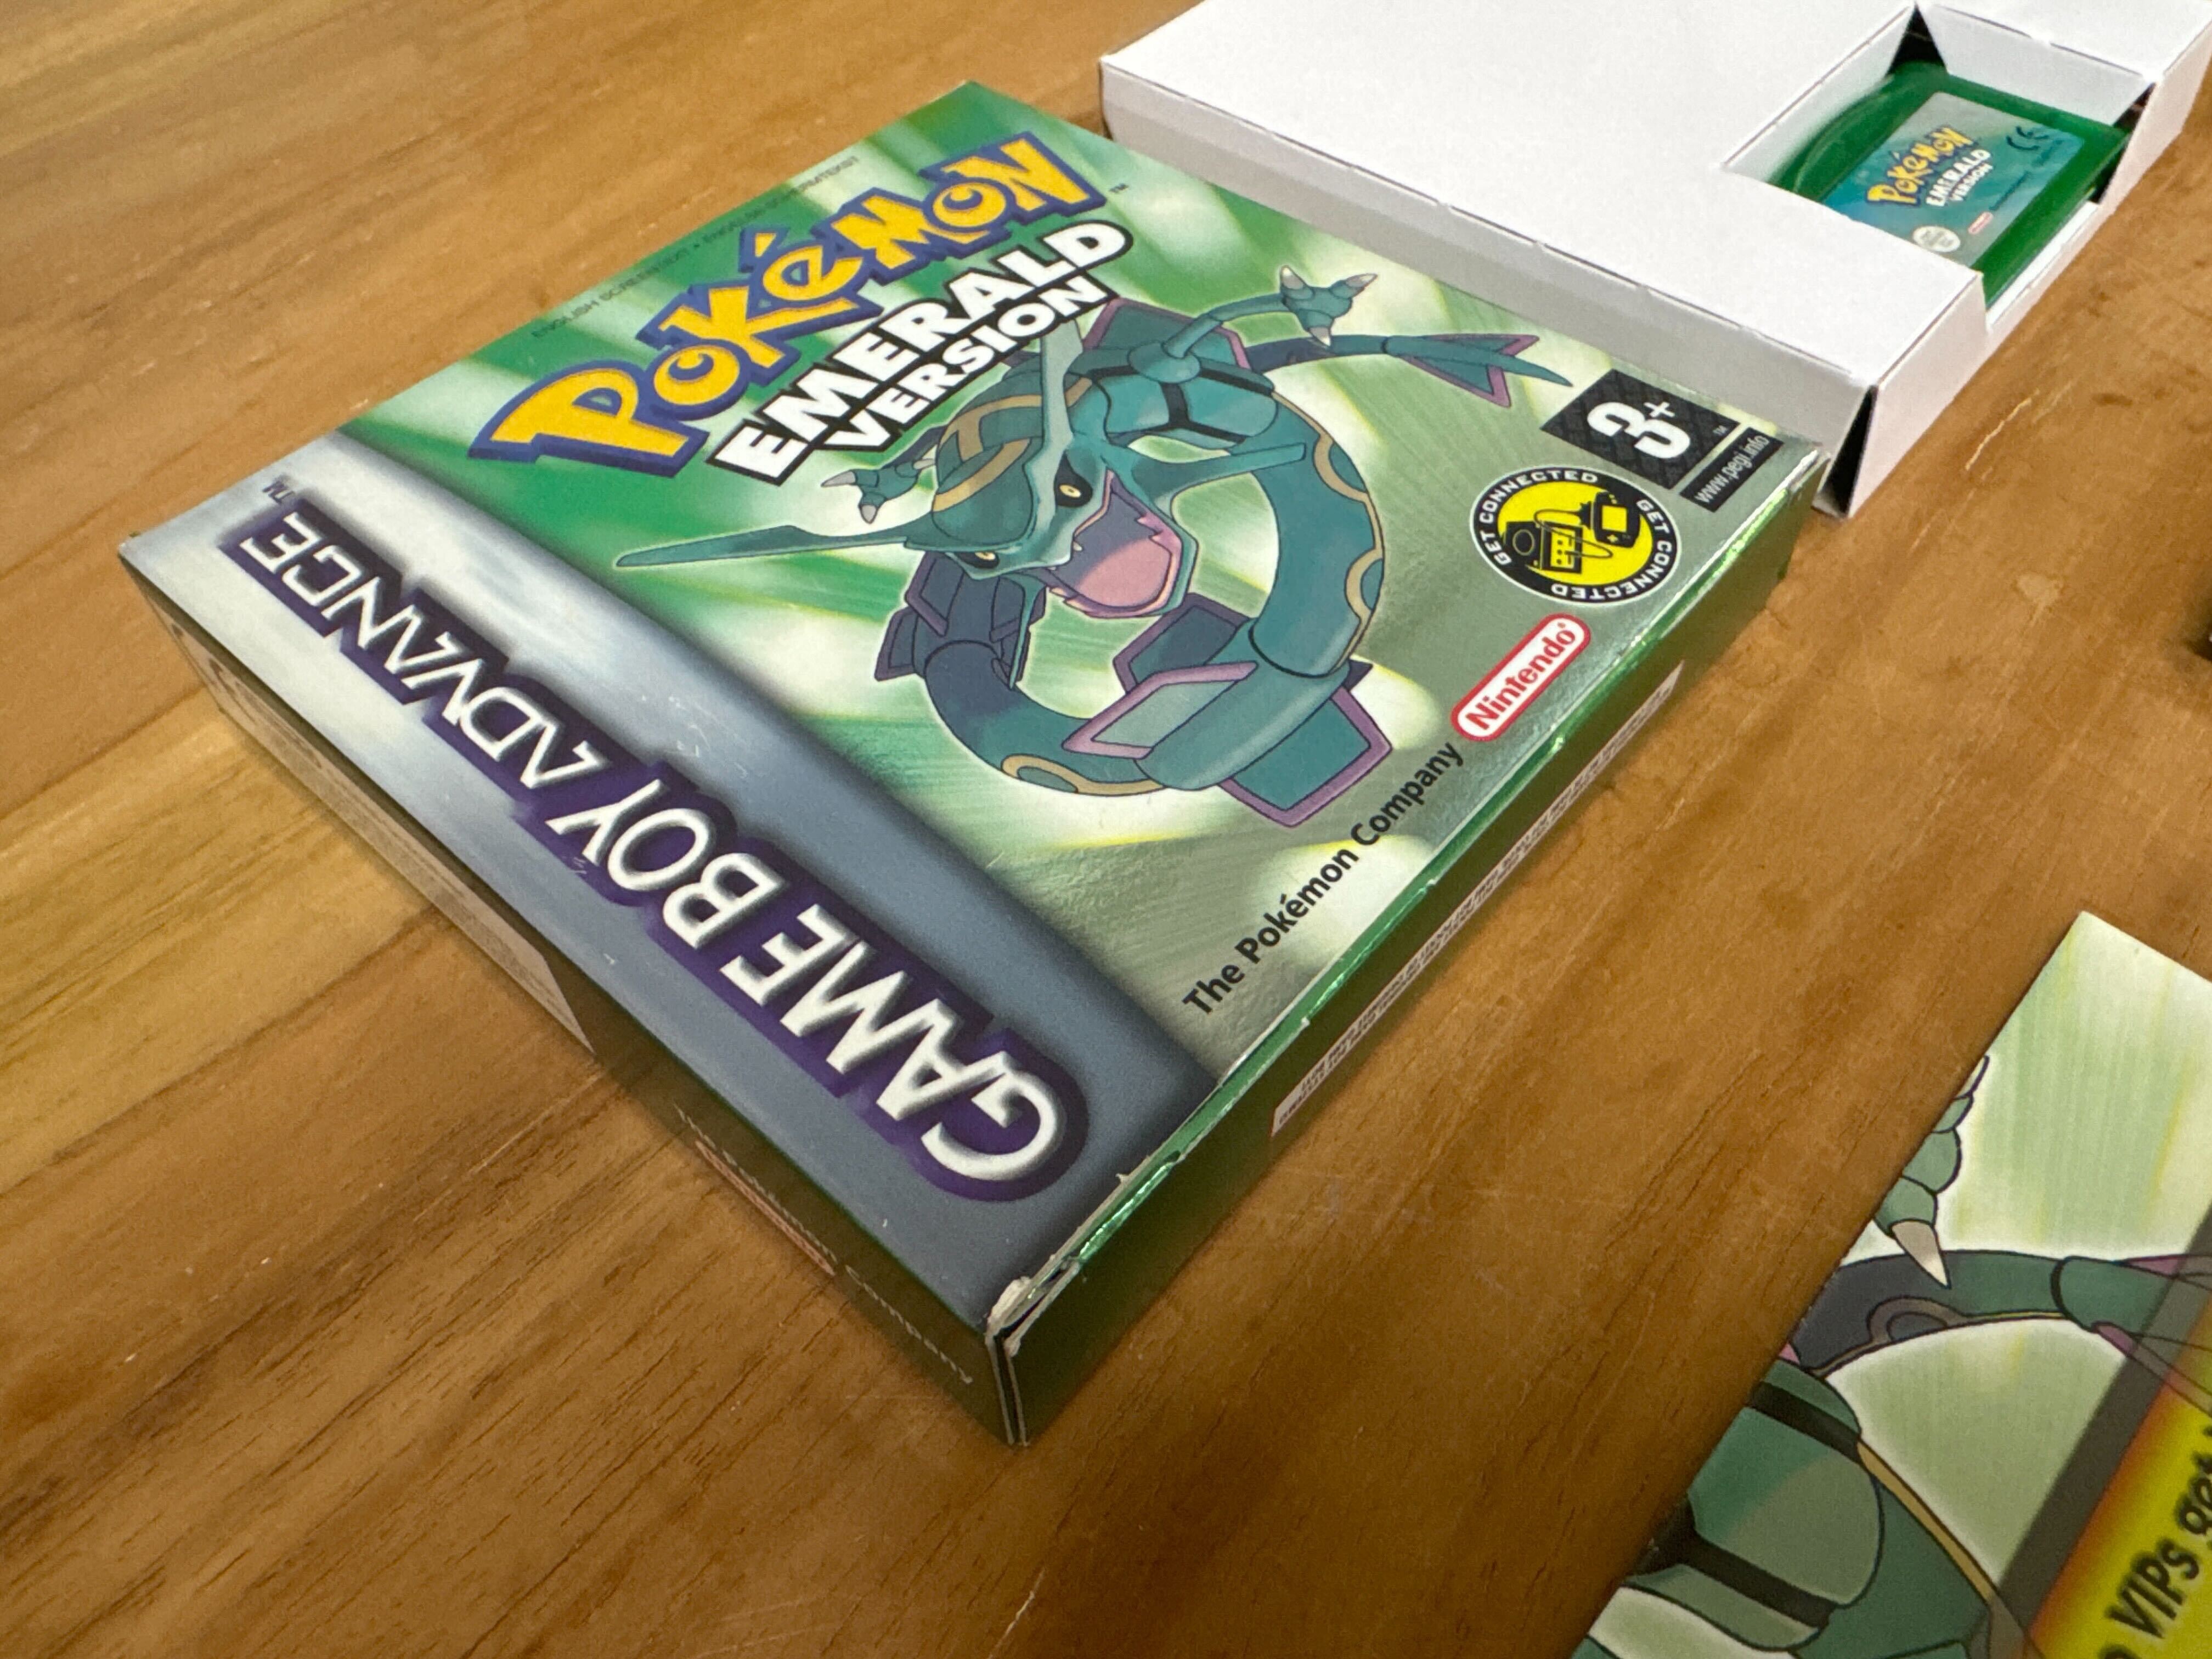 Pokemon Emerald - Gameboy Advance Games [Complete] - 4